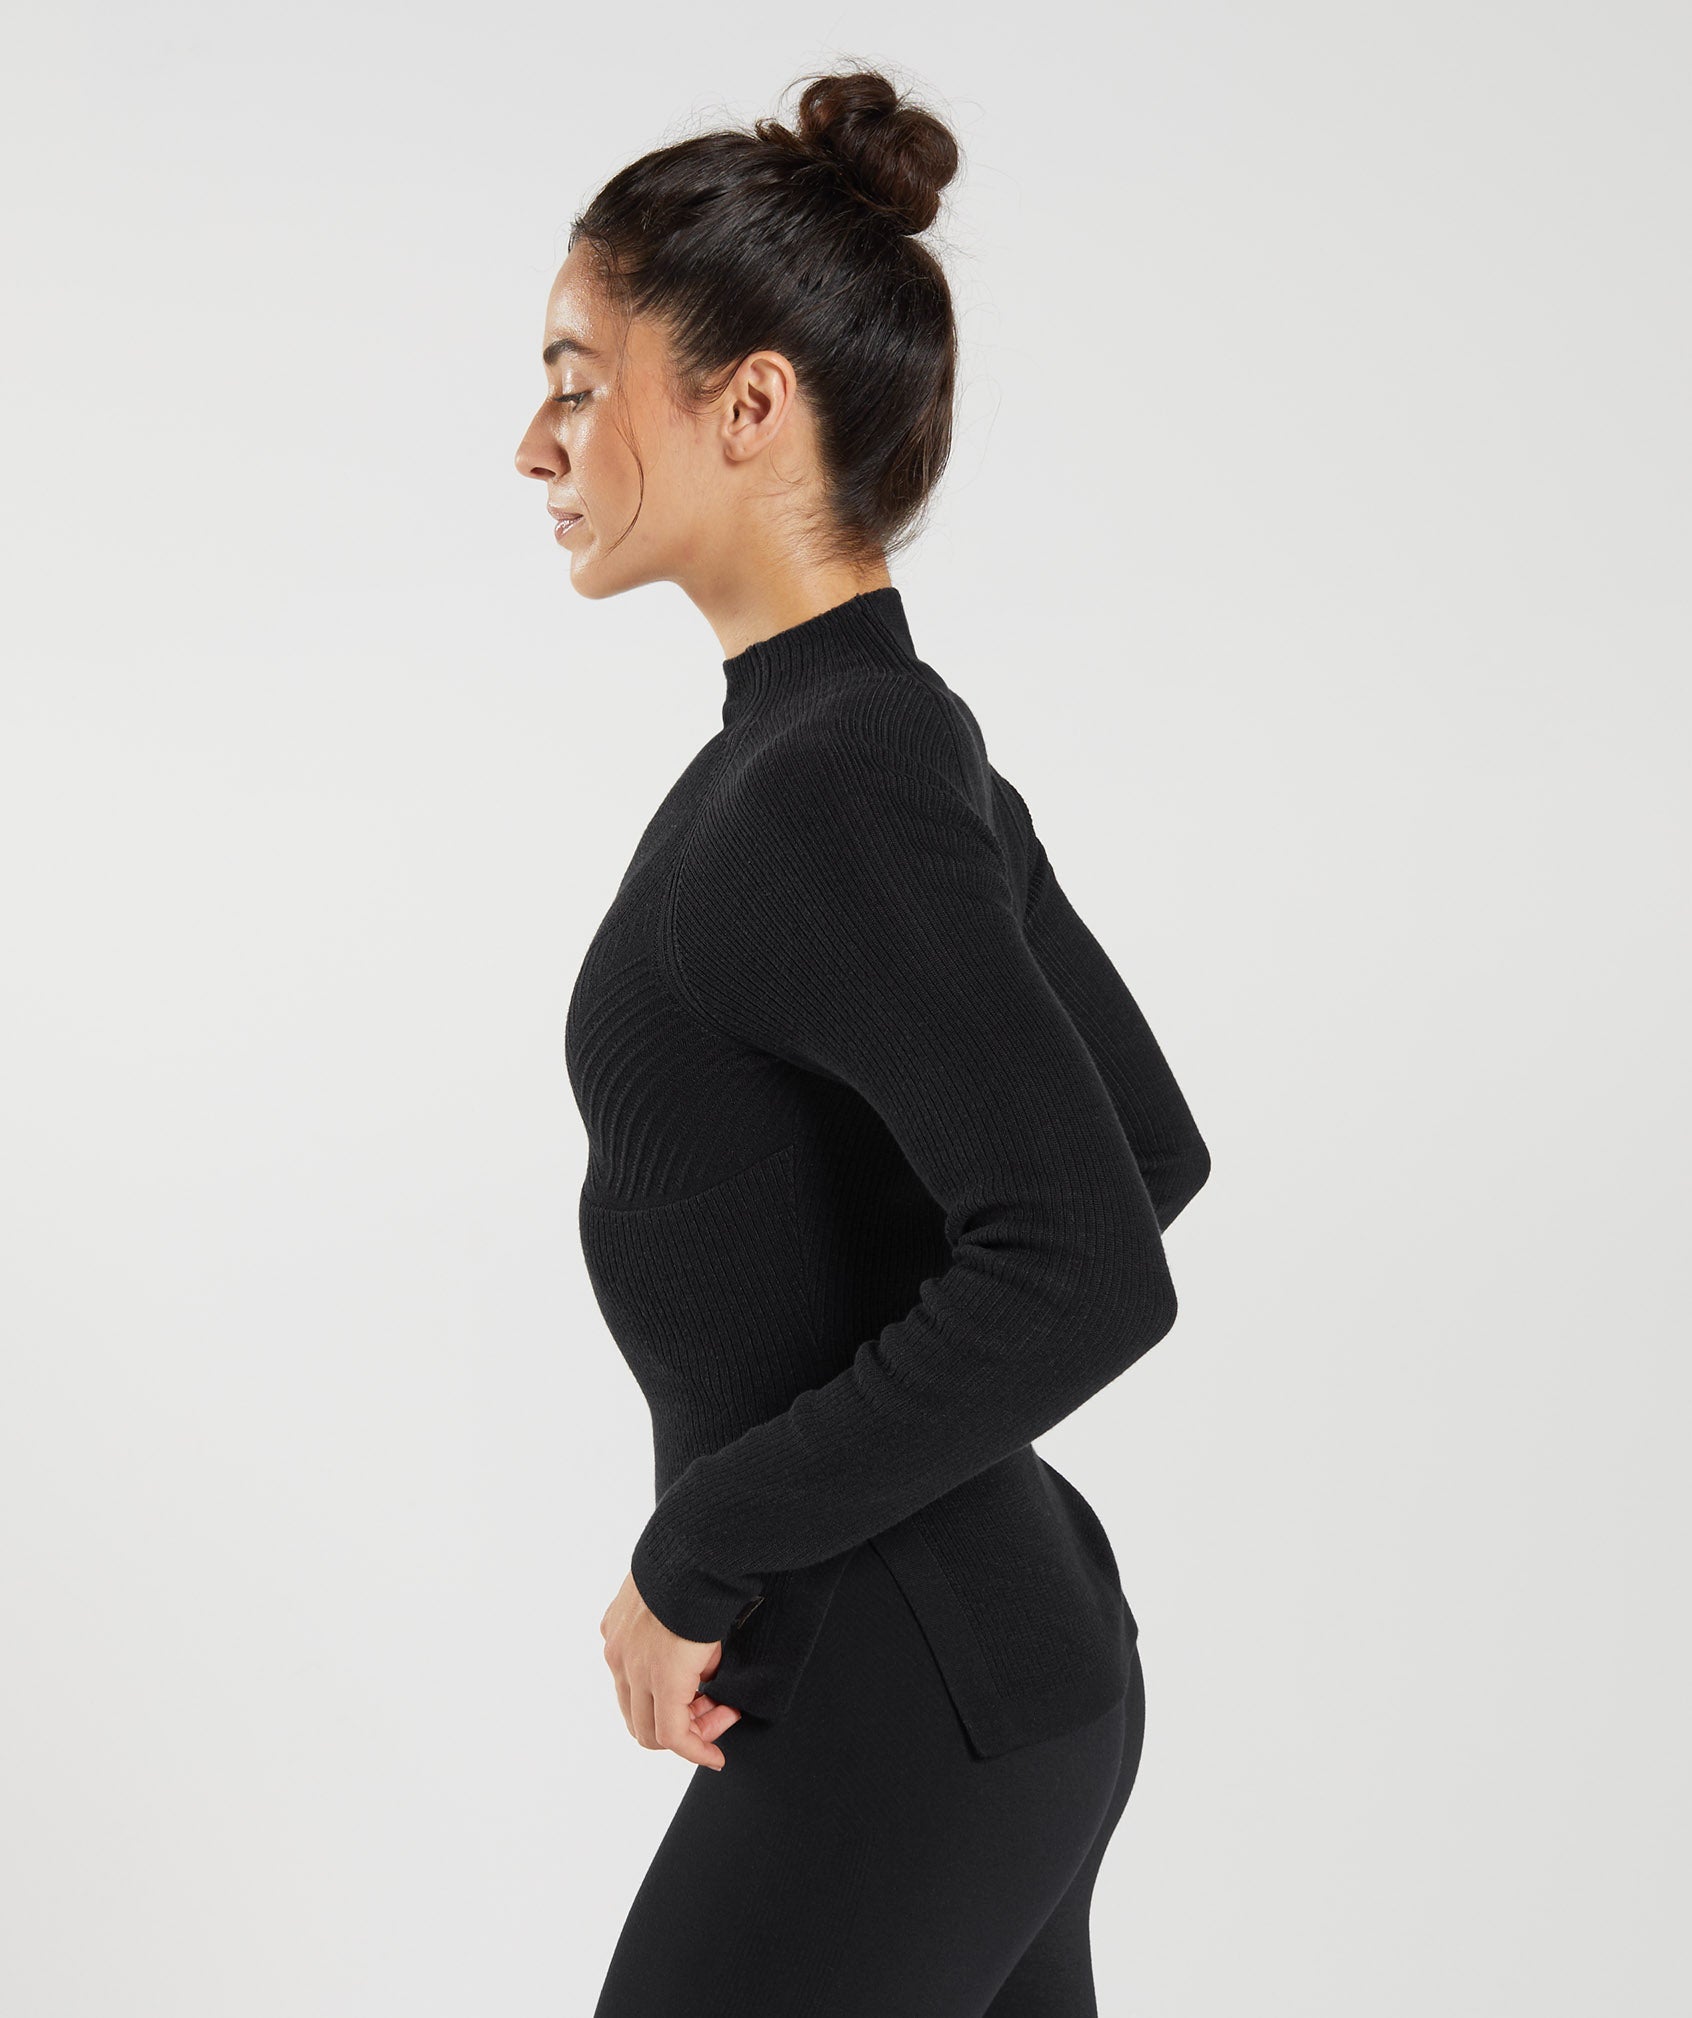 Pause Knitwear Long Sleeve Top in Black/Onyx Grey - view 4